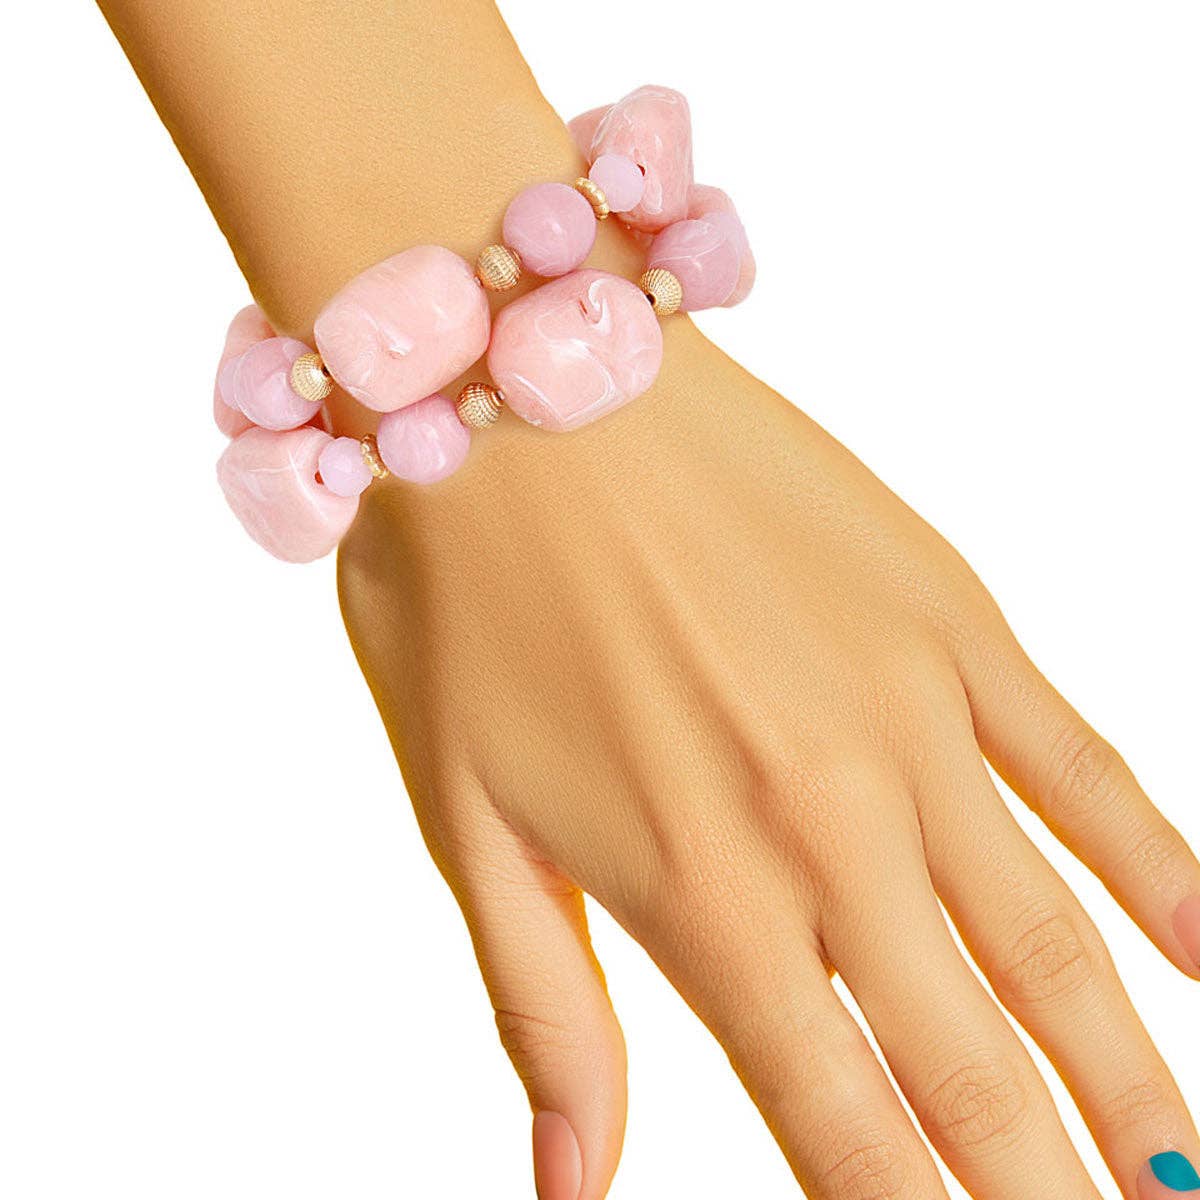 Light Pink Marbled Bead Bracelets: Stretch to Fit / Light Pink / Gold